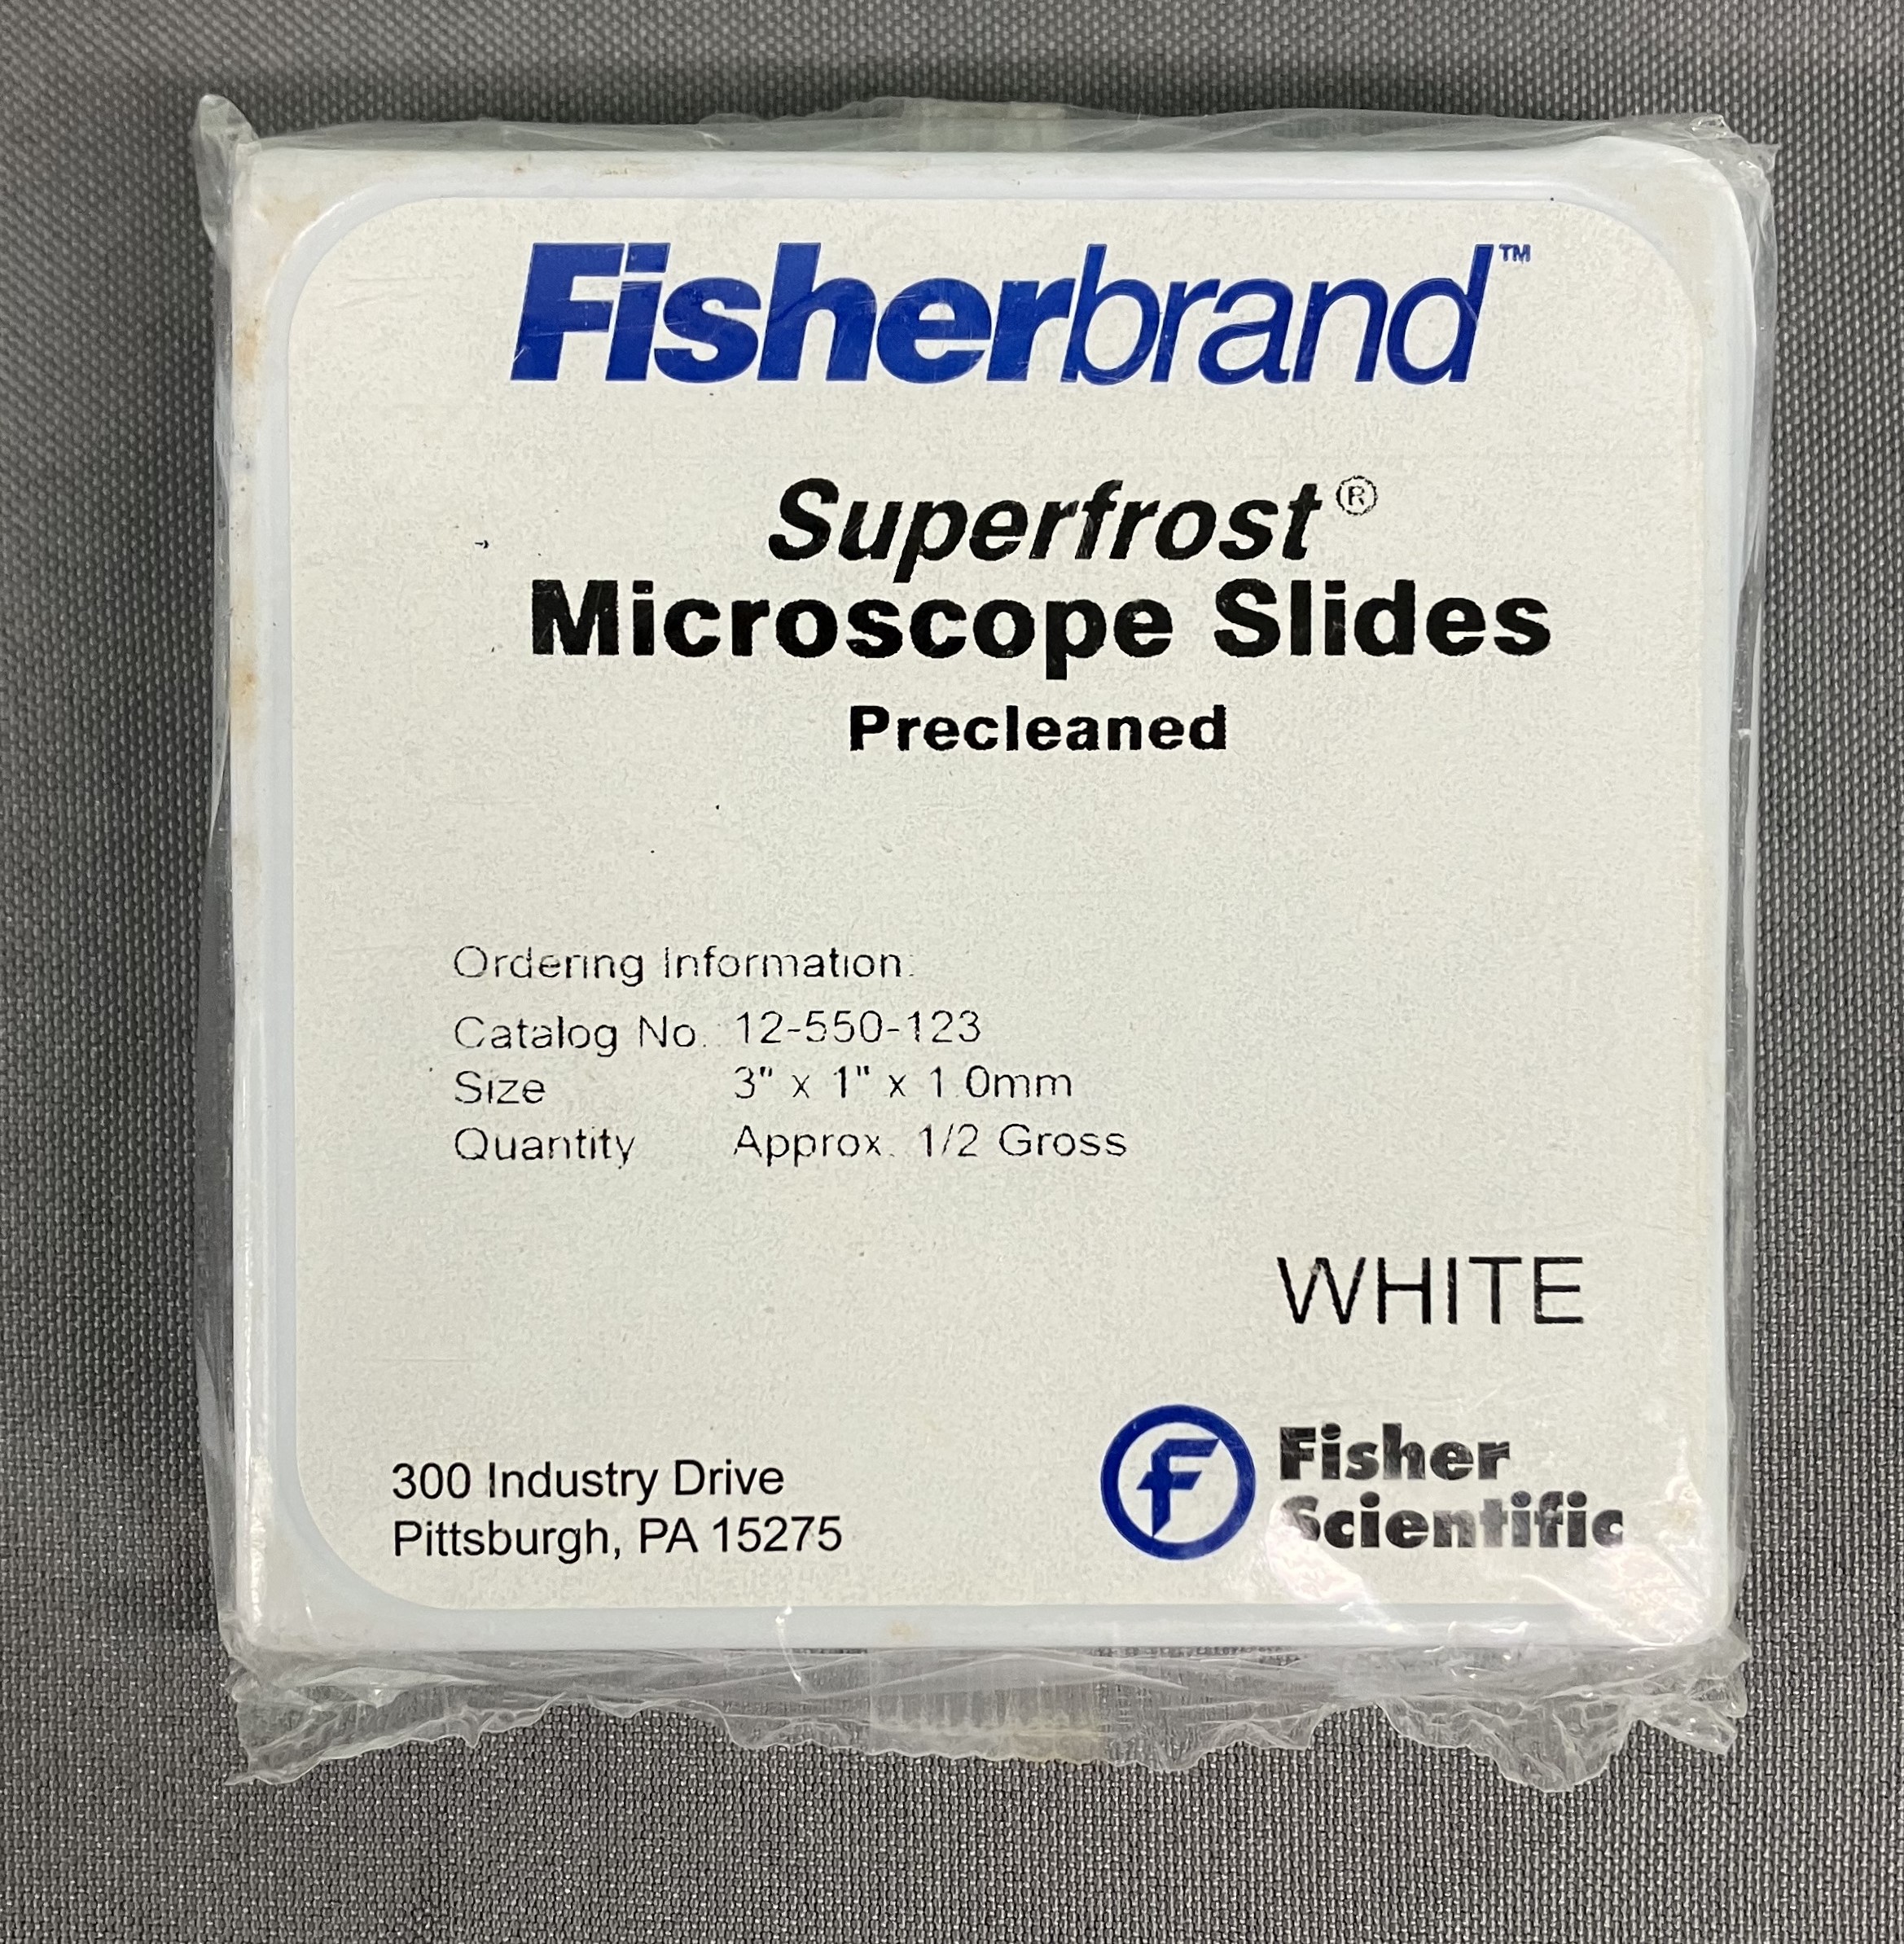 Fisher Scientific Fisherbrand Superfrost Microscope Slides